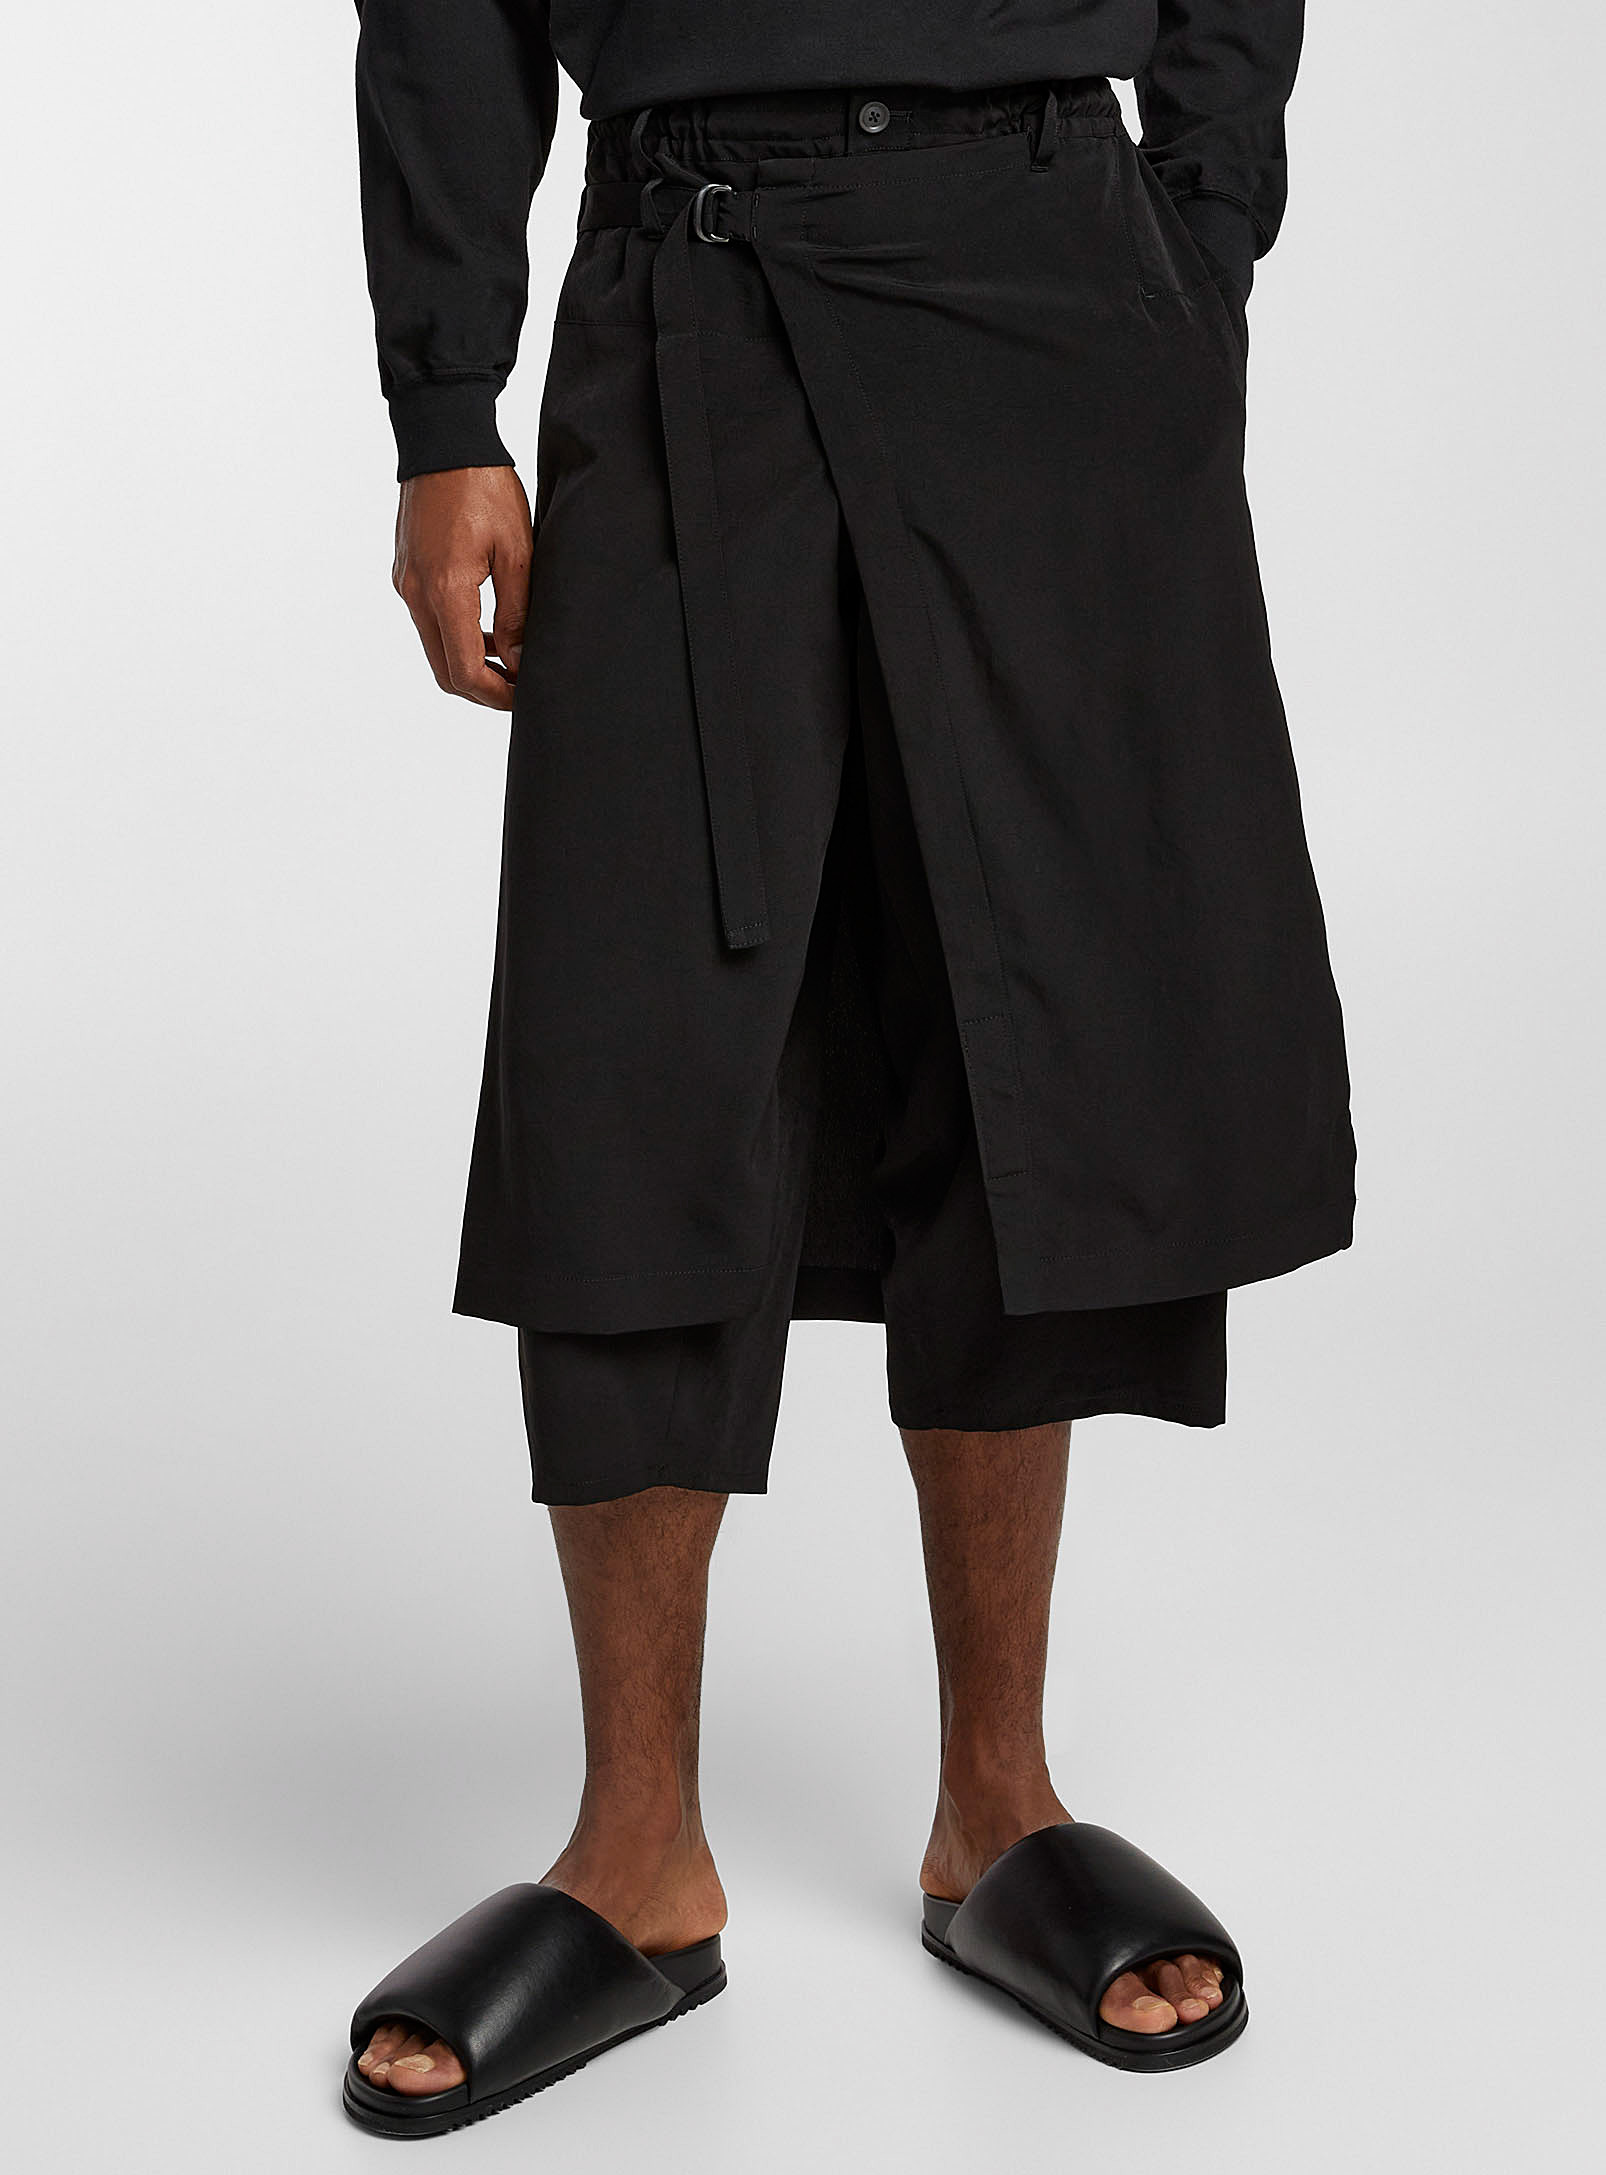 Yohji Yamamoto - Men's Layered skirt silky pant